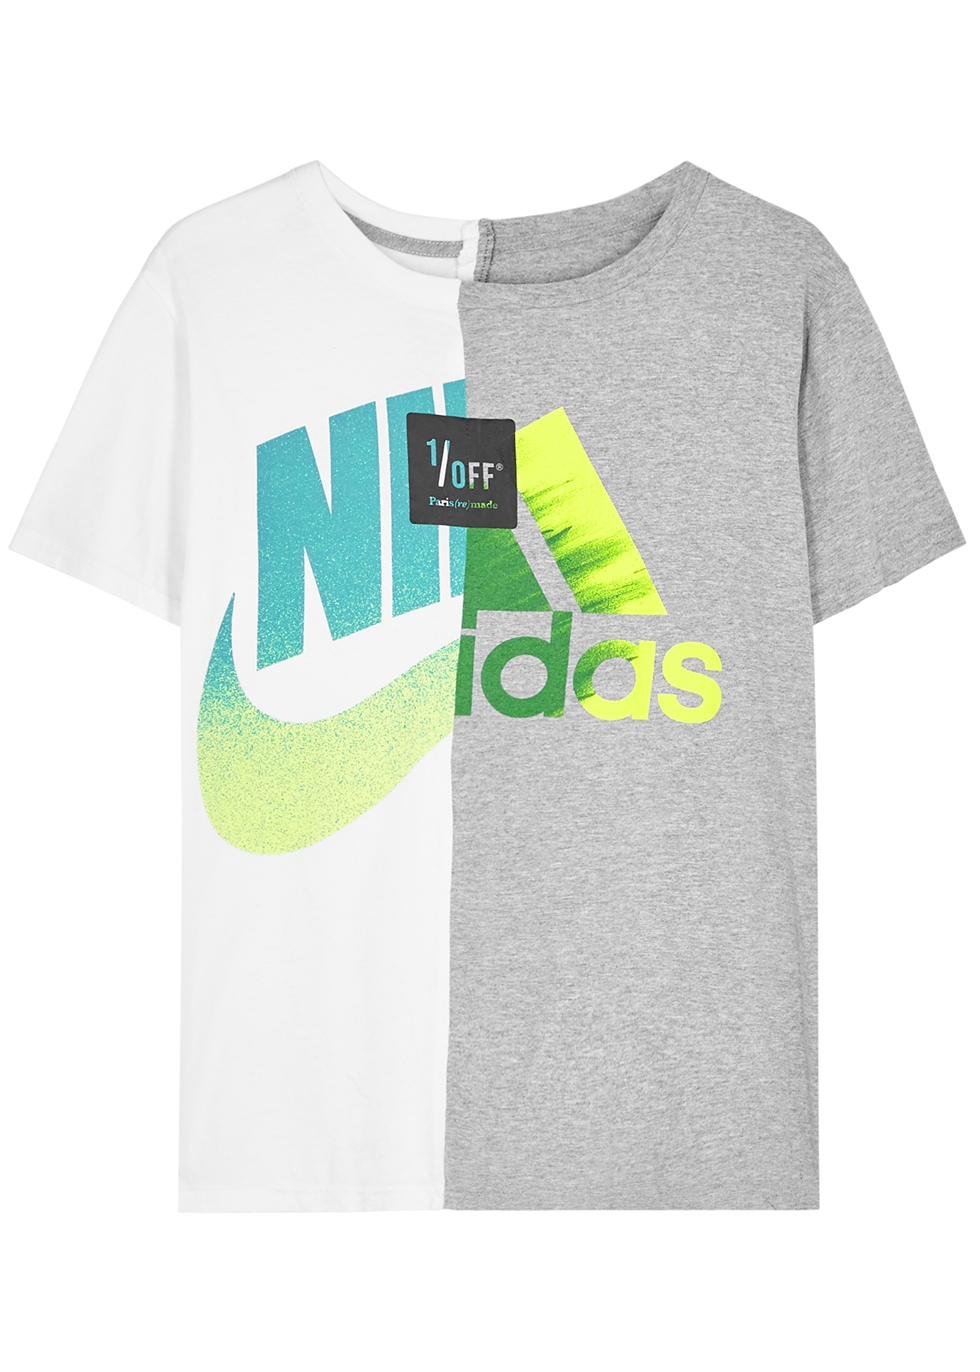 1/OFF Paris Nike X Adidas printed T 